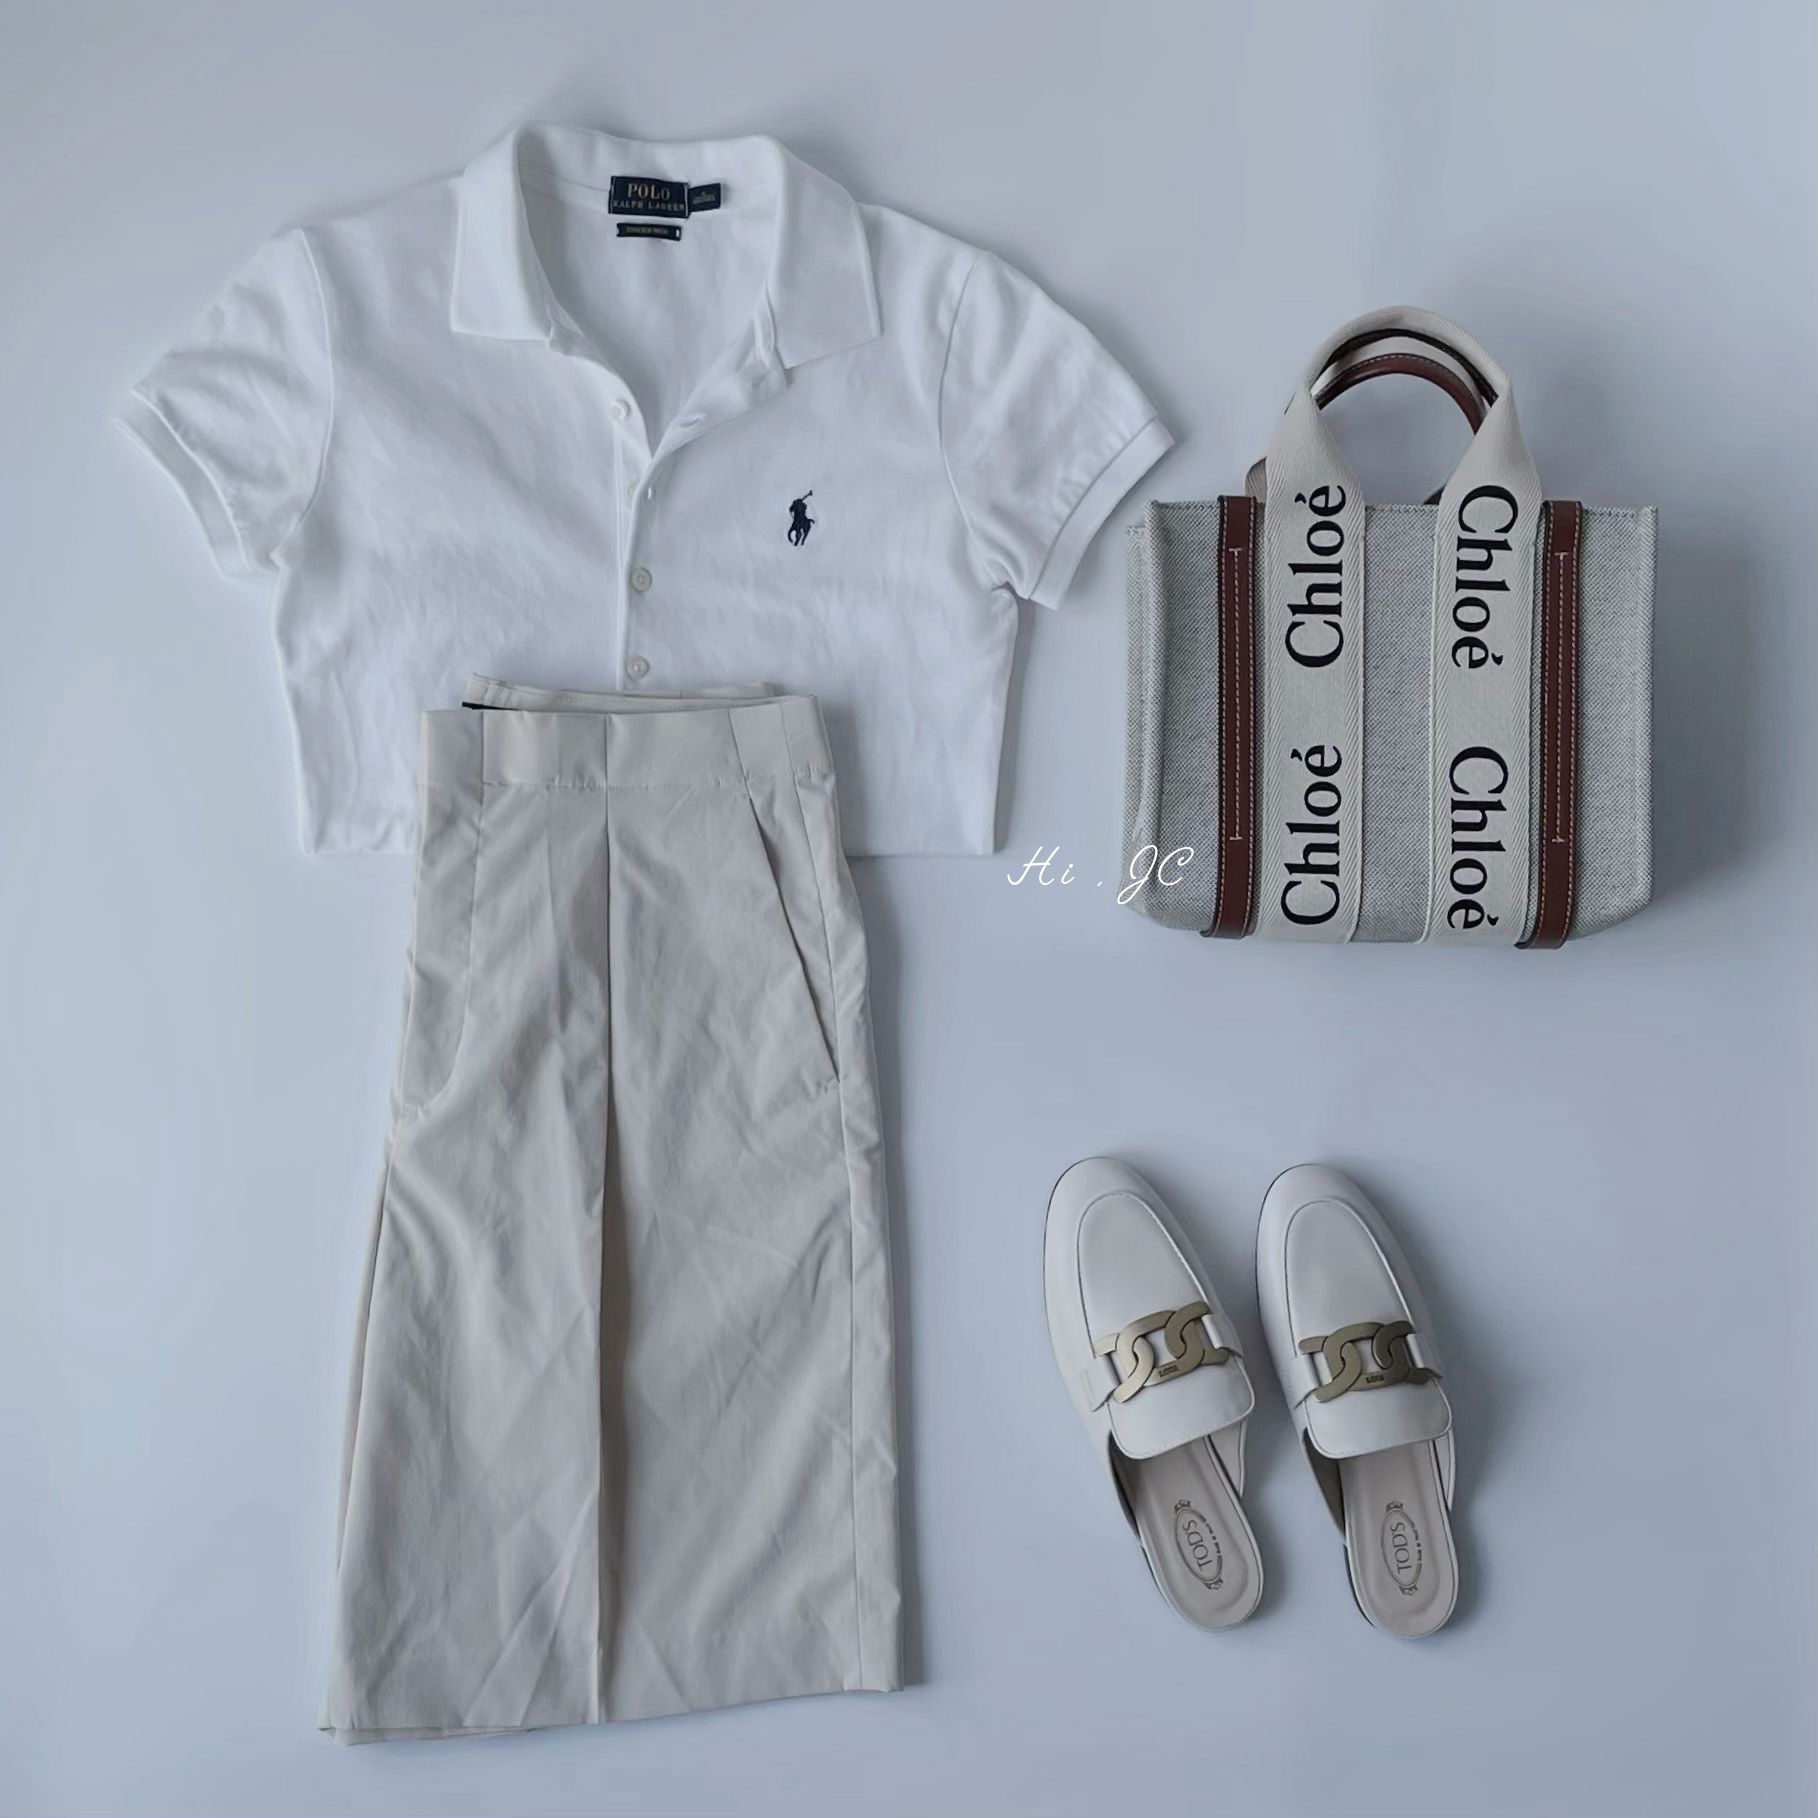 [穿搭] Chloé Woody Tote包+Polo Ralph Lauren 上衣+Uniqlo褲+Tod’s穆勒鞋